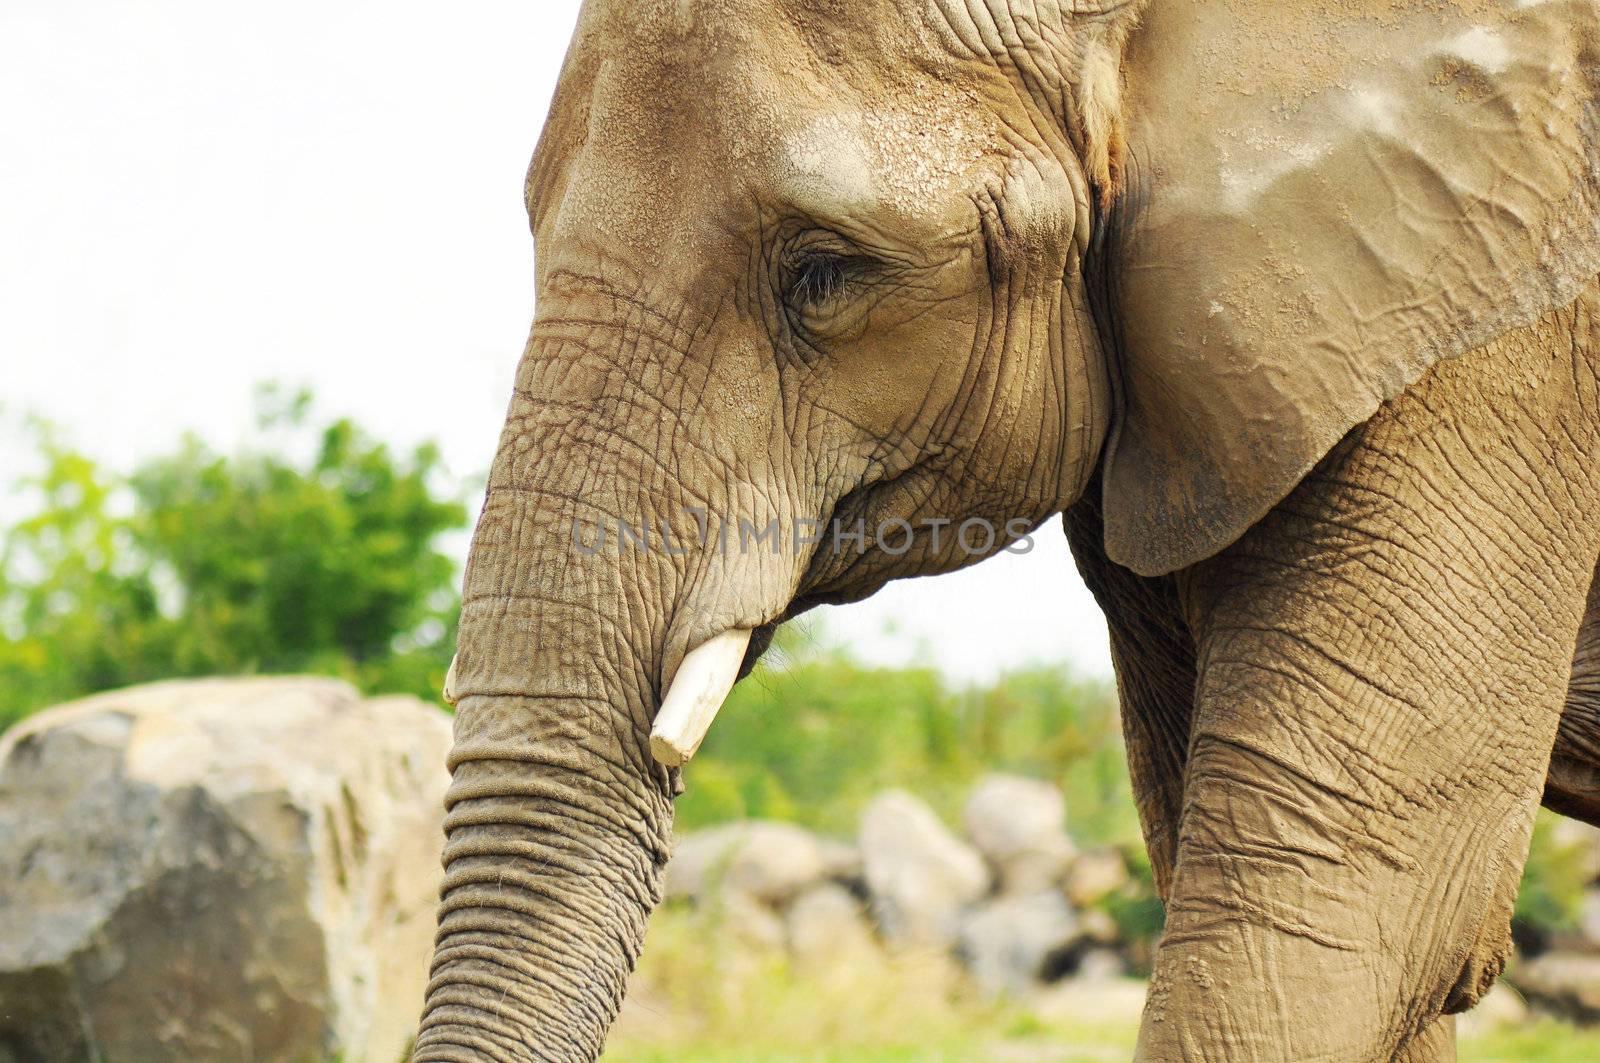 Elephant portrait by Mirage3